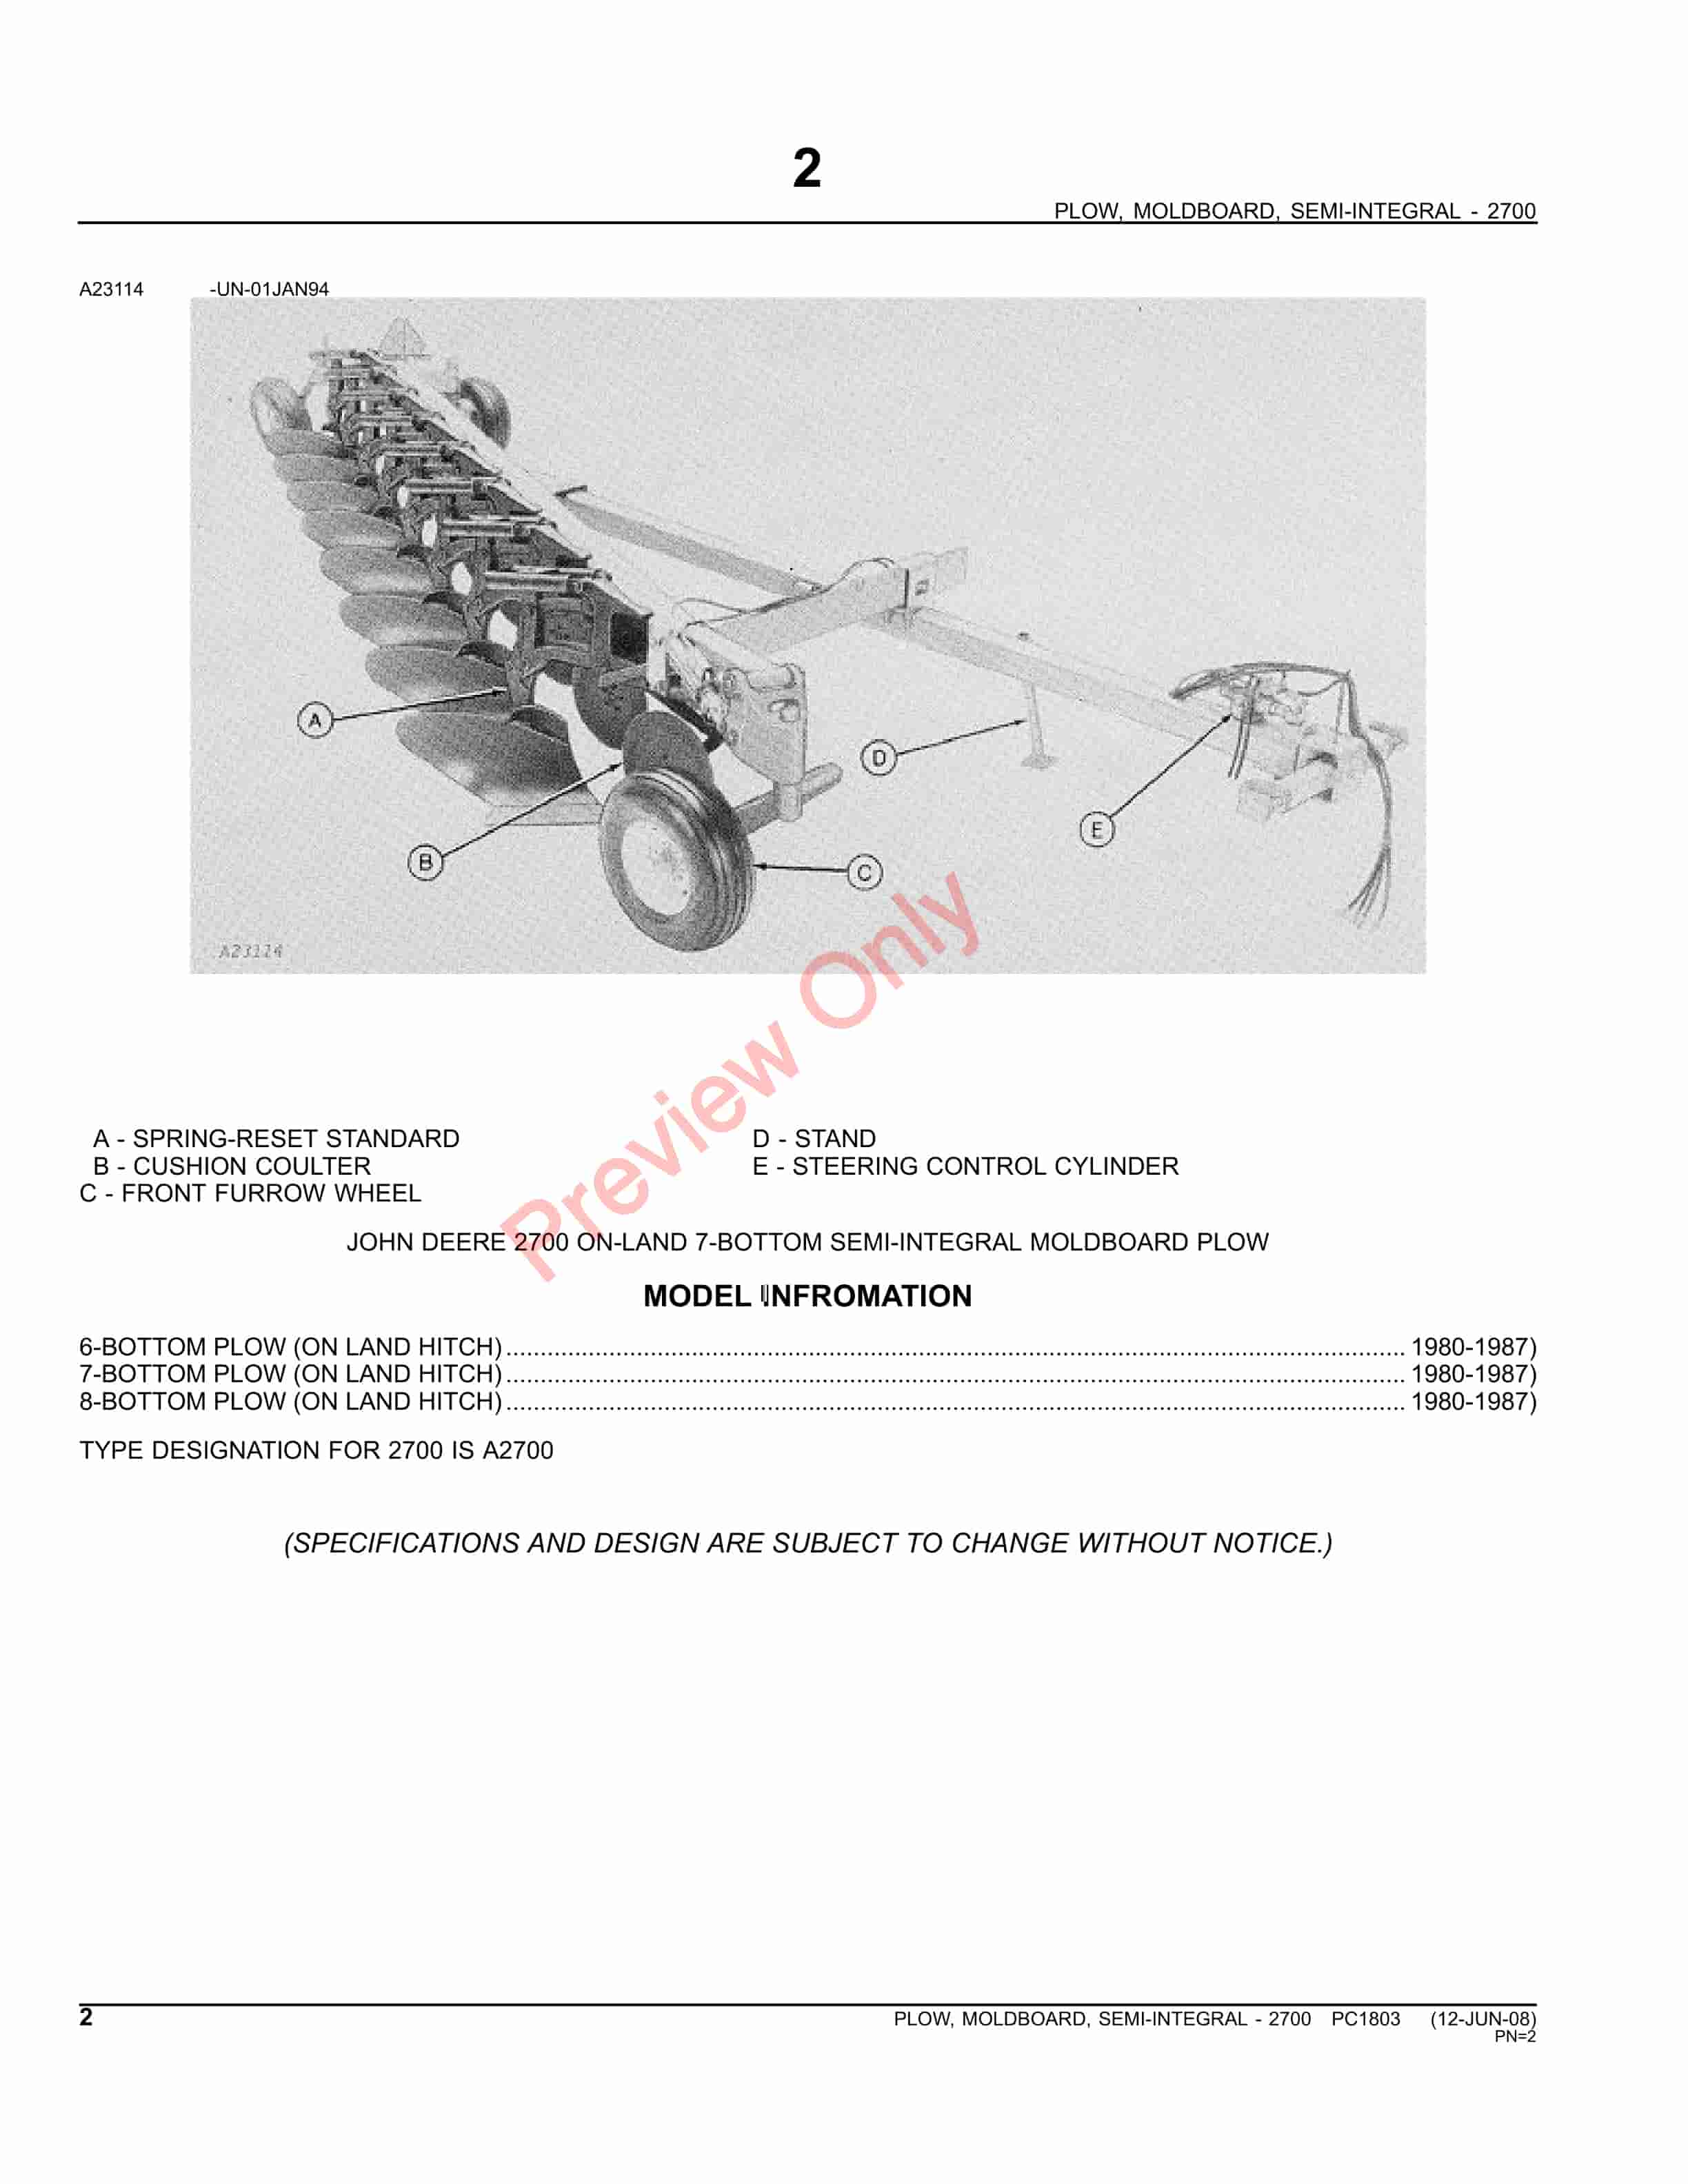 John Deere 2700 Semi-Integral Moldboard Plow Parts Catalog PC1803 31MAY11-4